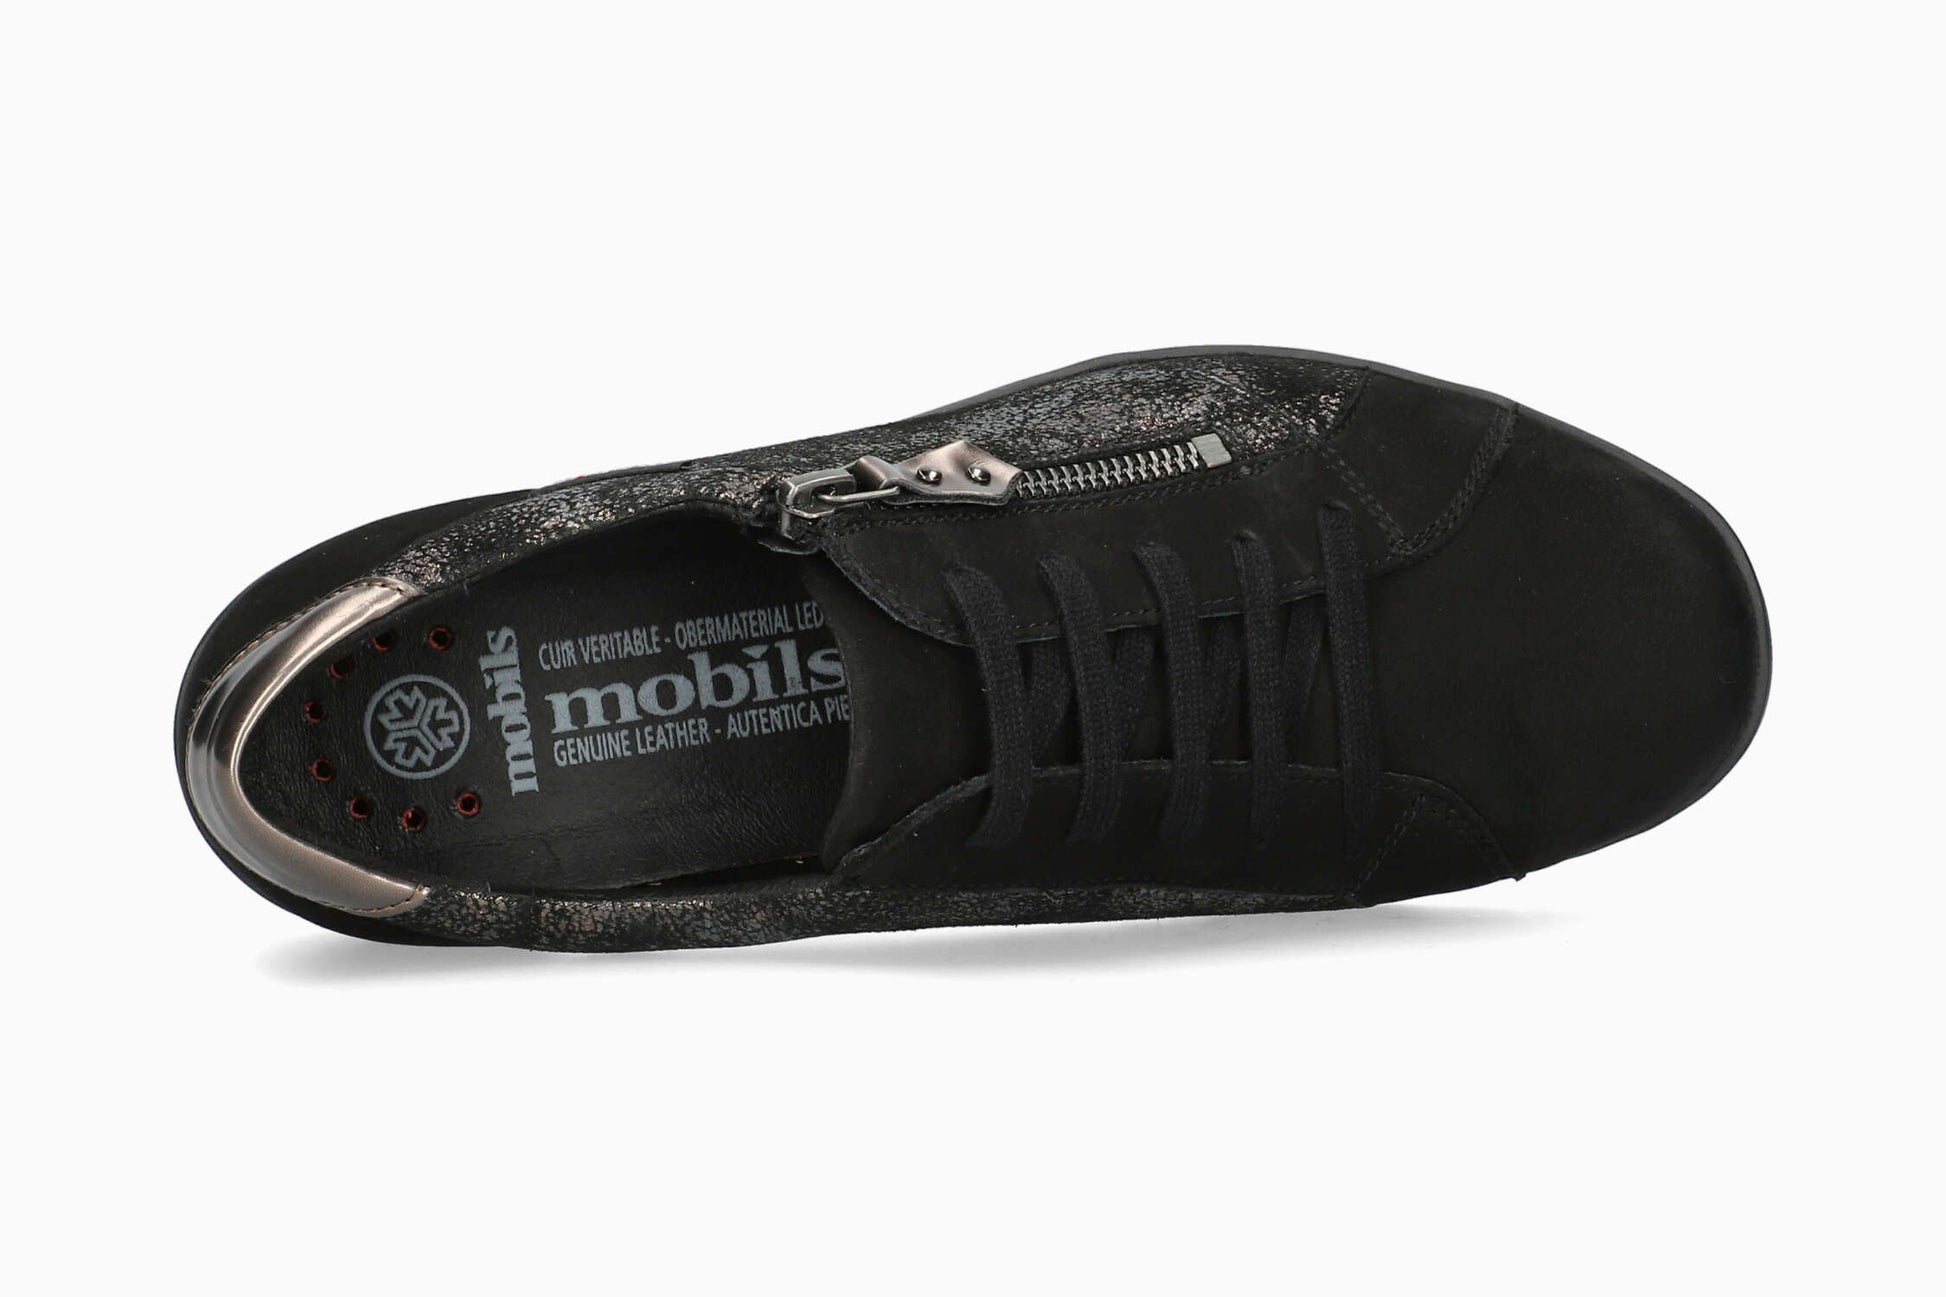 Mobils Camilia Black Women's Shoe Top